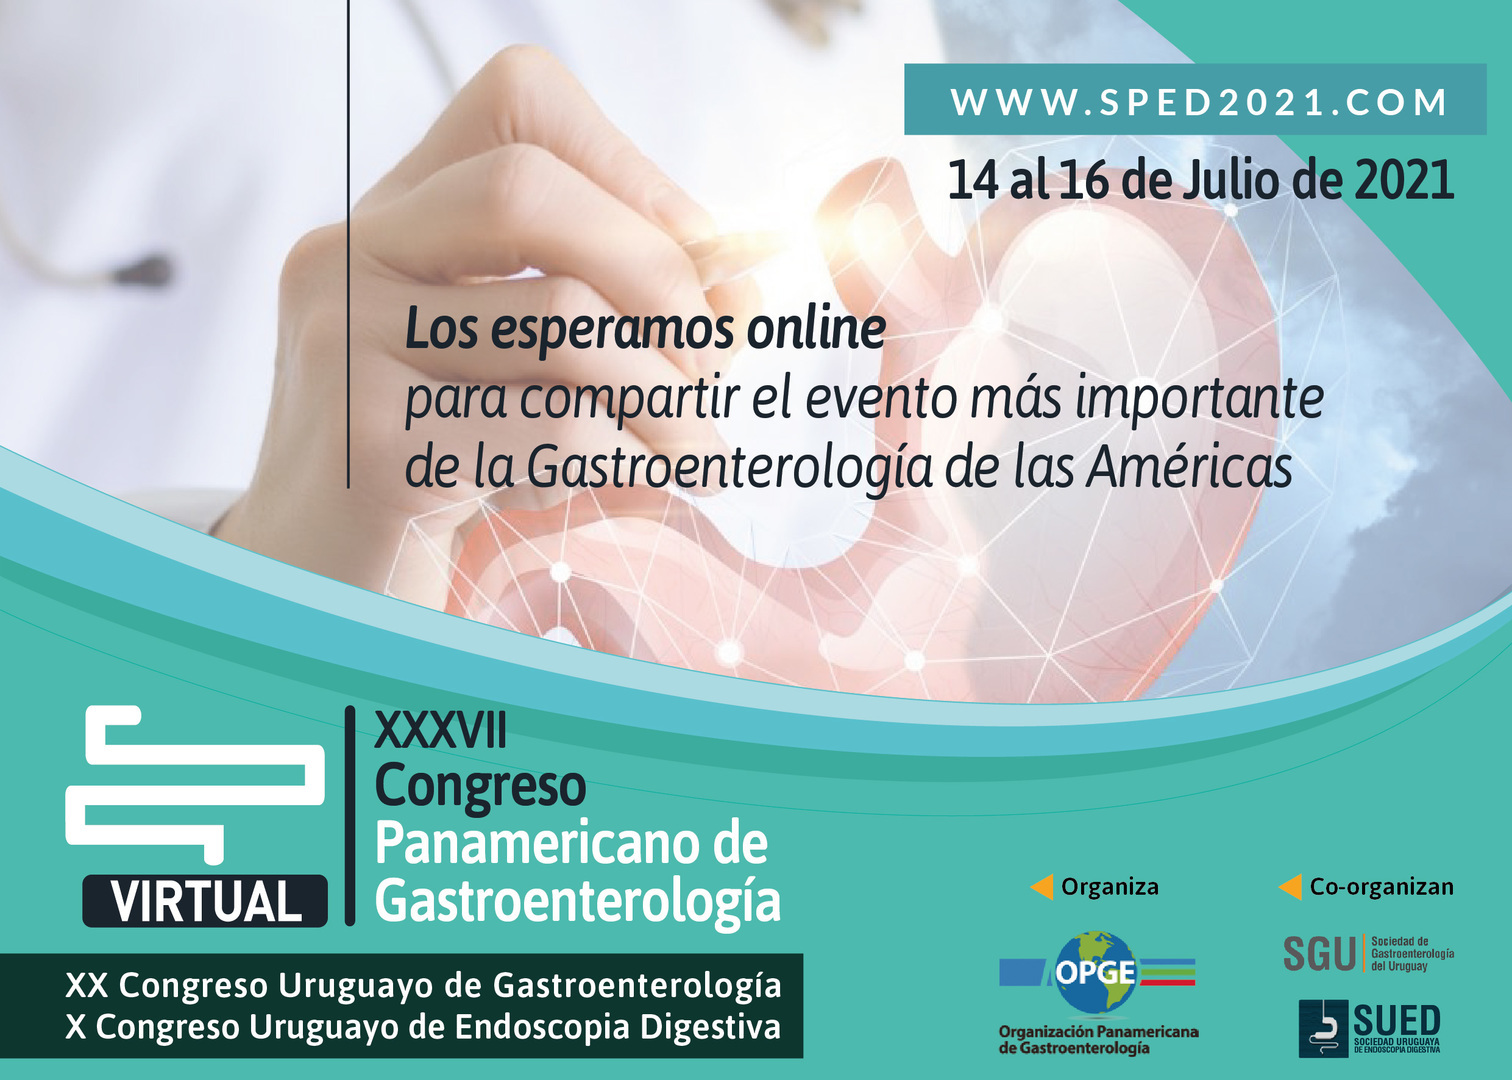 XXXVII Pan American Congress of Gastroenterology, Online, Argentina